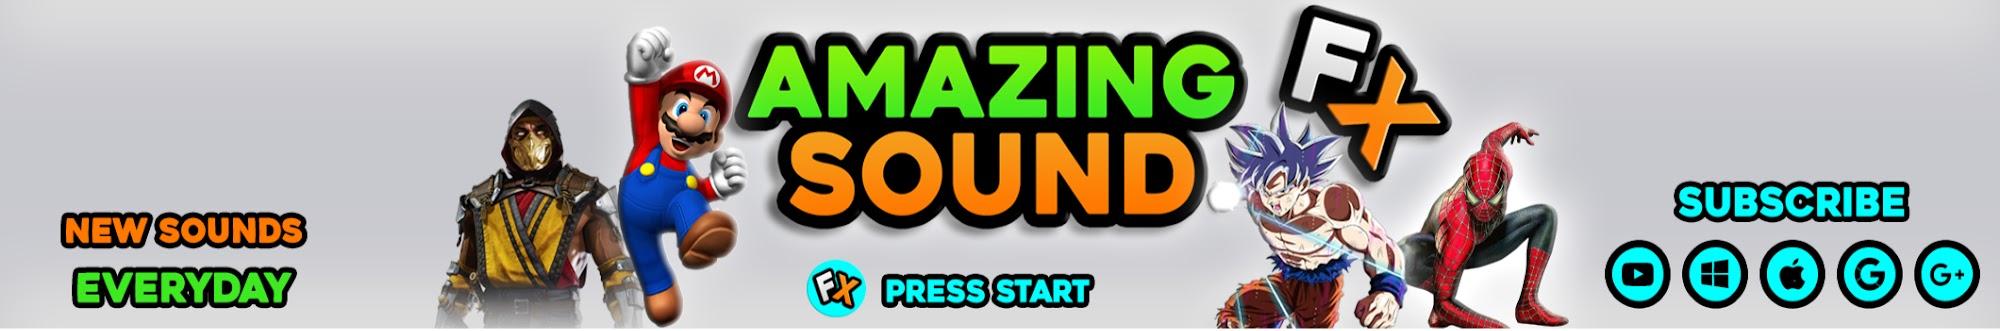 Amazing Sound FX